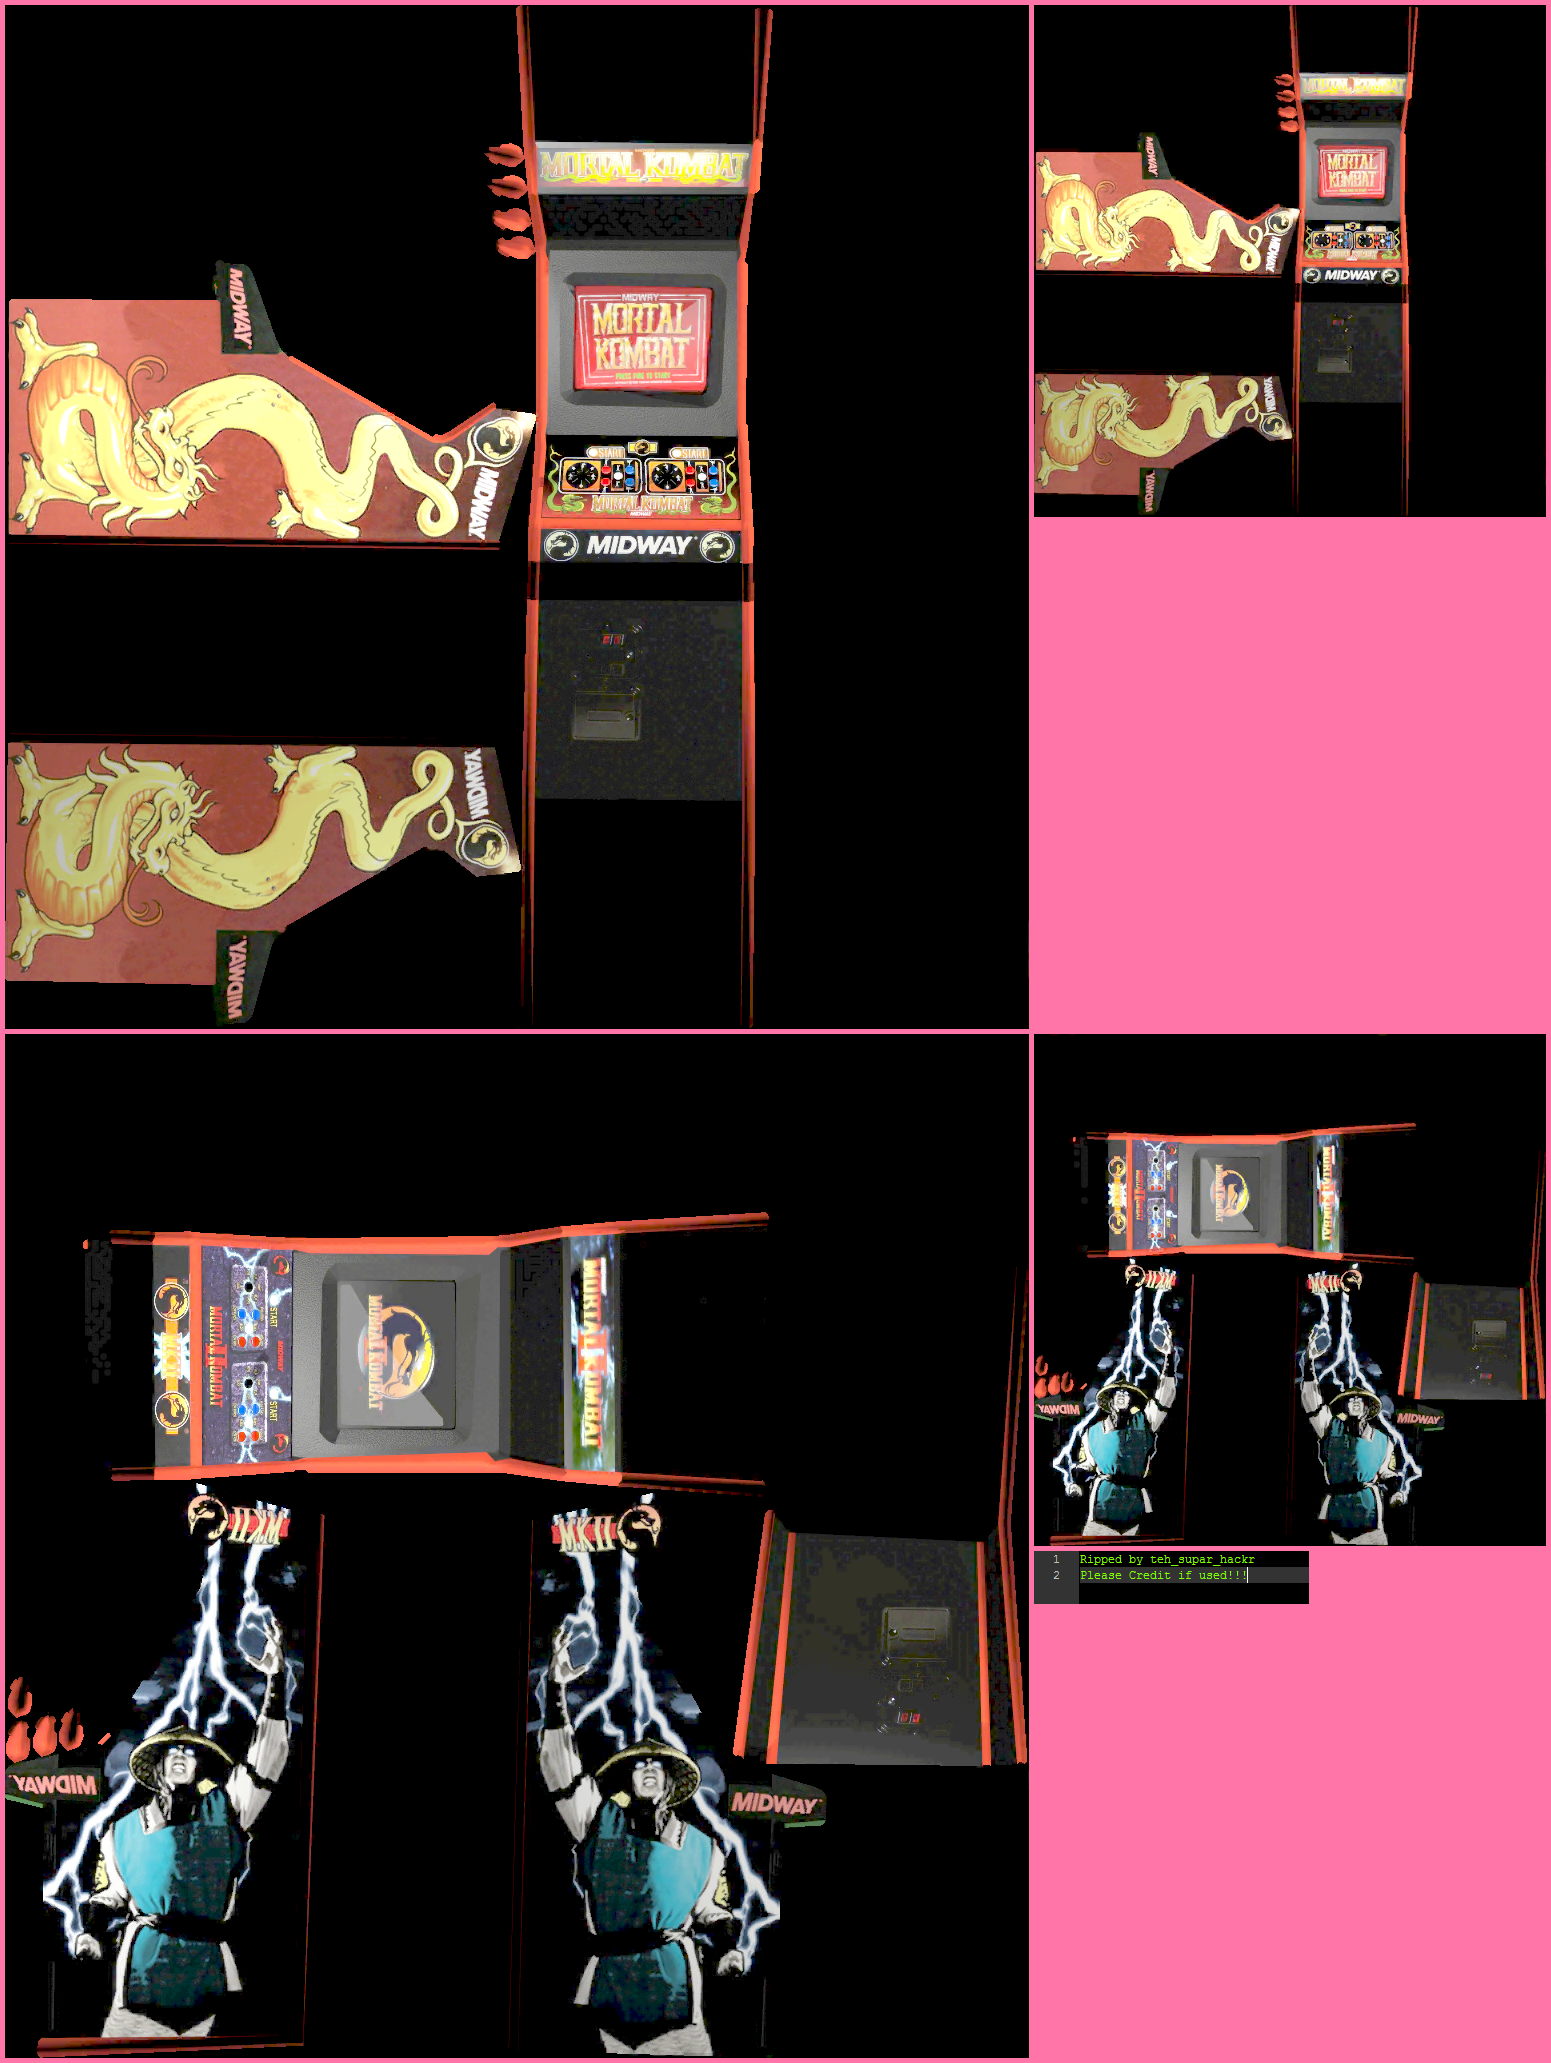 Ultimate Mortal Kombat 3 (iOS) - Arcade Cabinets